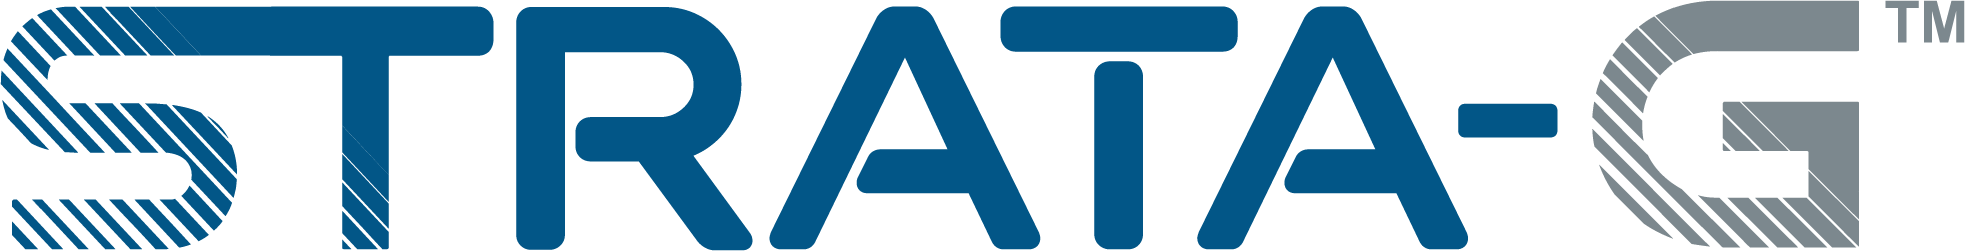 Strata-G logo